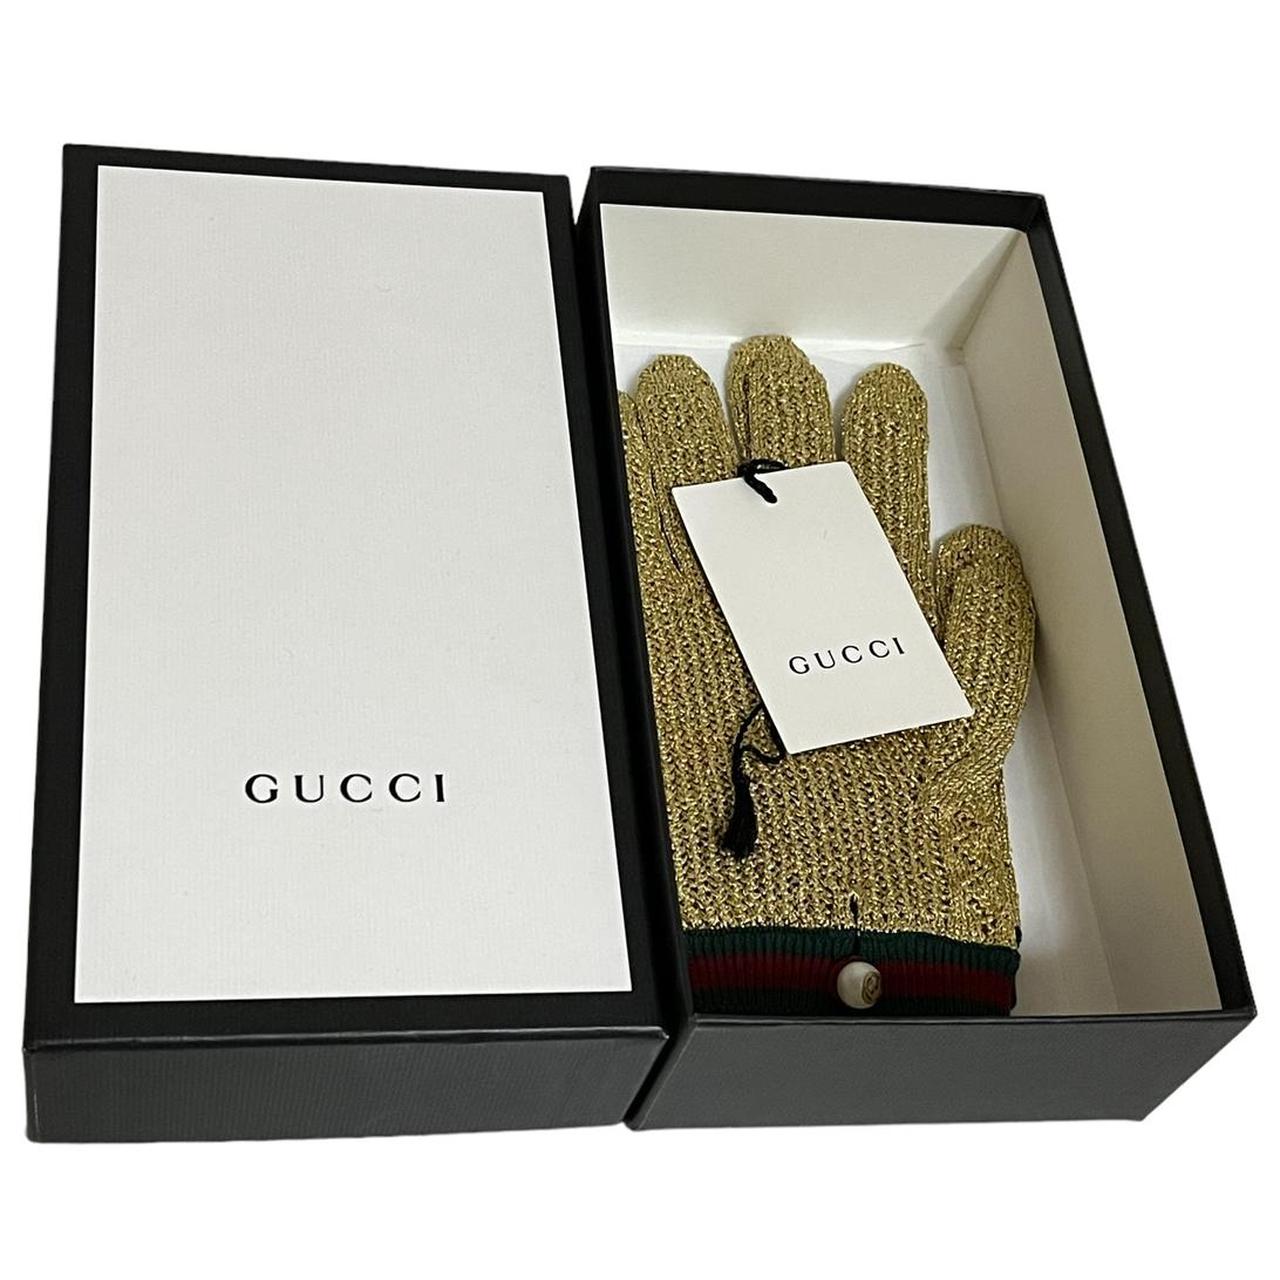 Gucci gloves - Depop